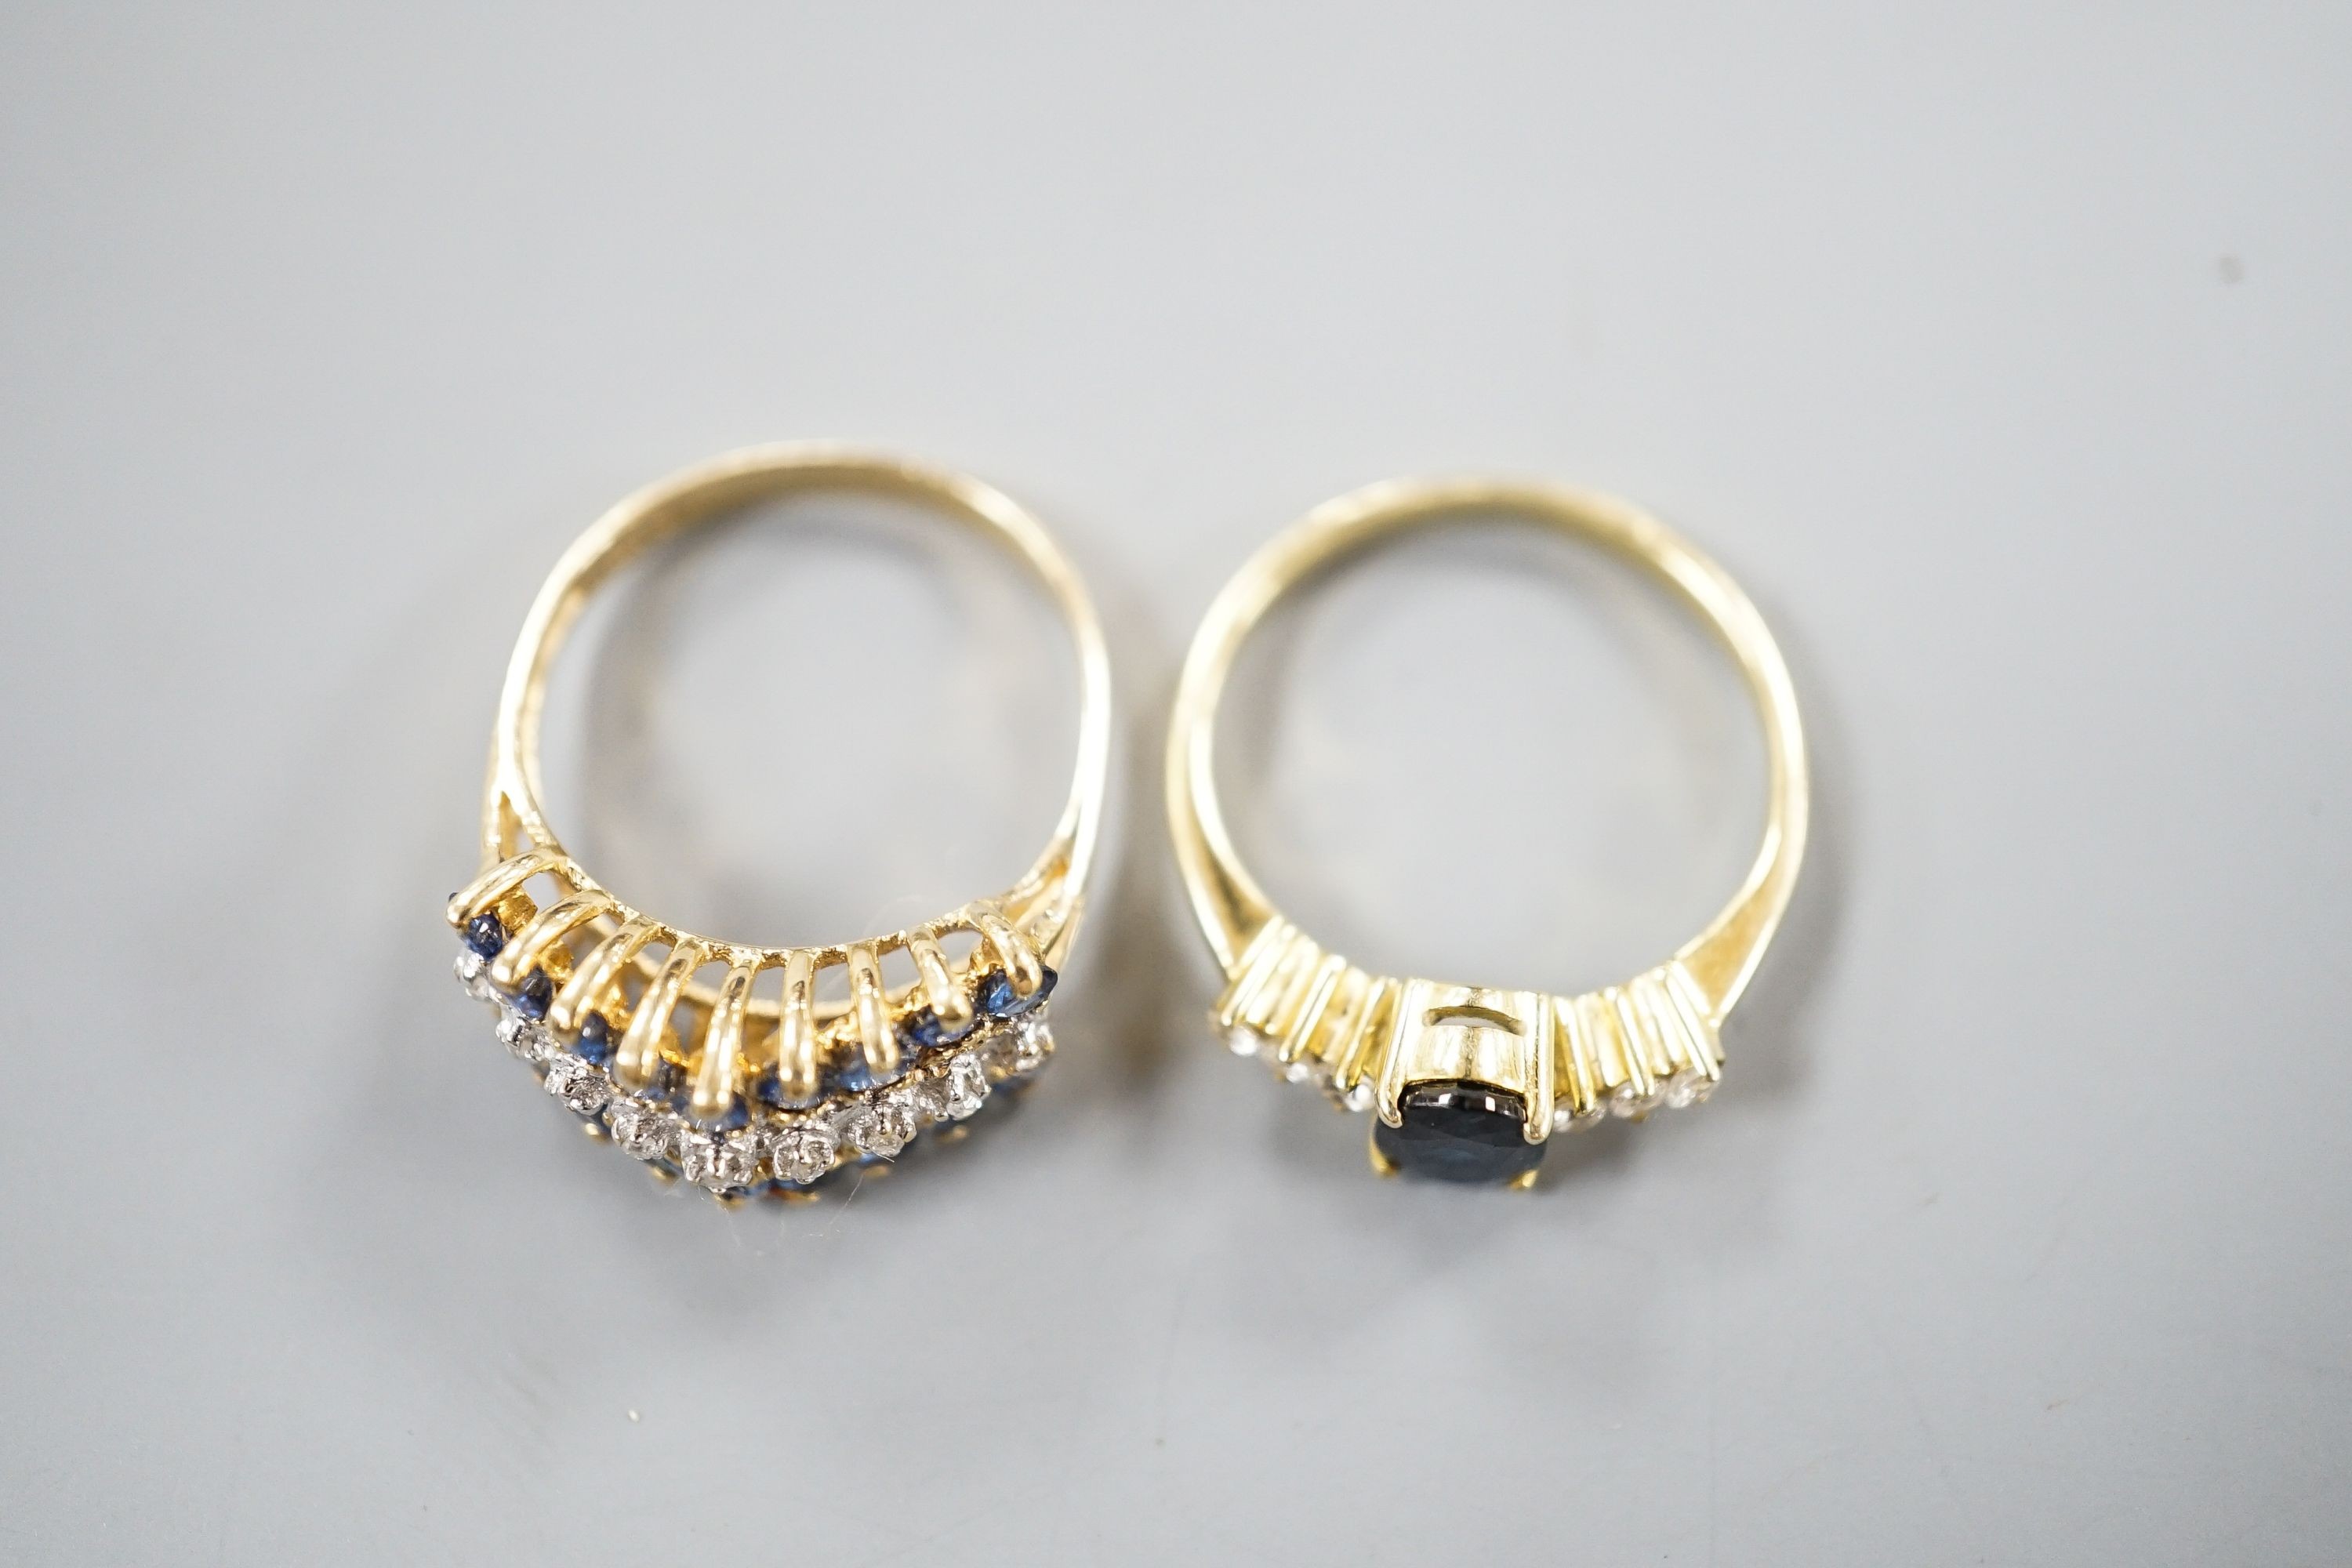 Two modern 14k yellow metal, sapphire and diamond set dress rings, sizes L & K/L, gross weight 5.1 grams.